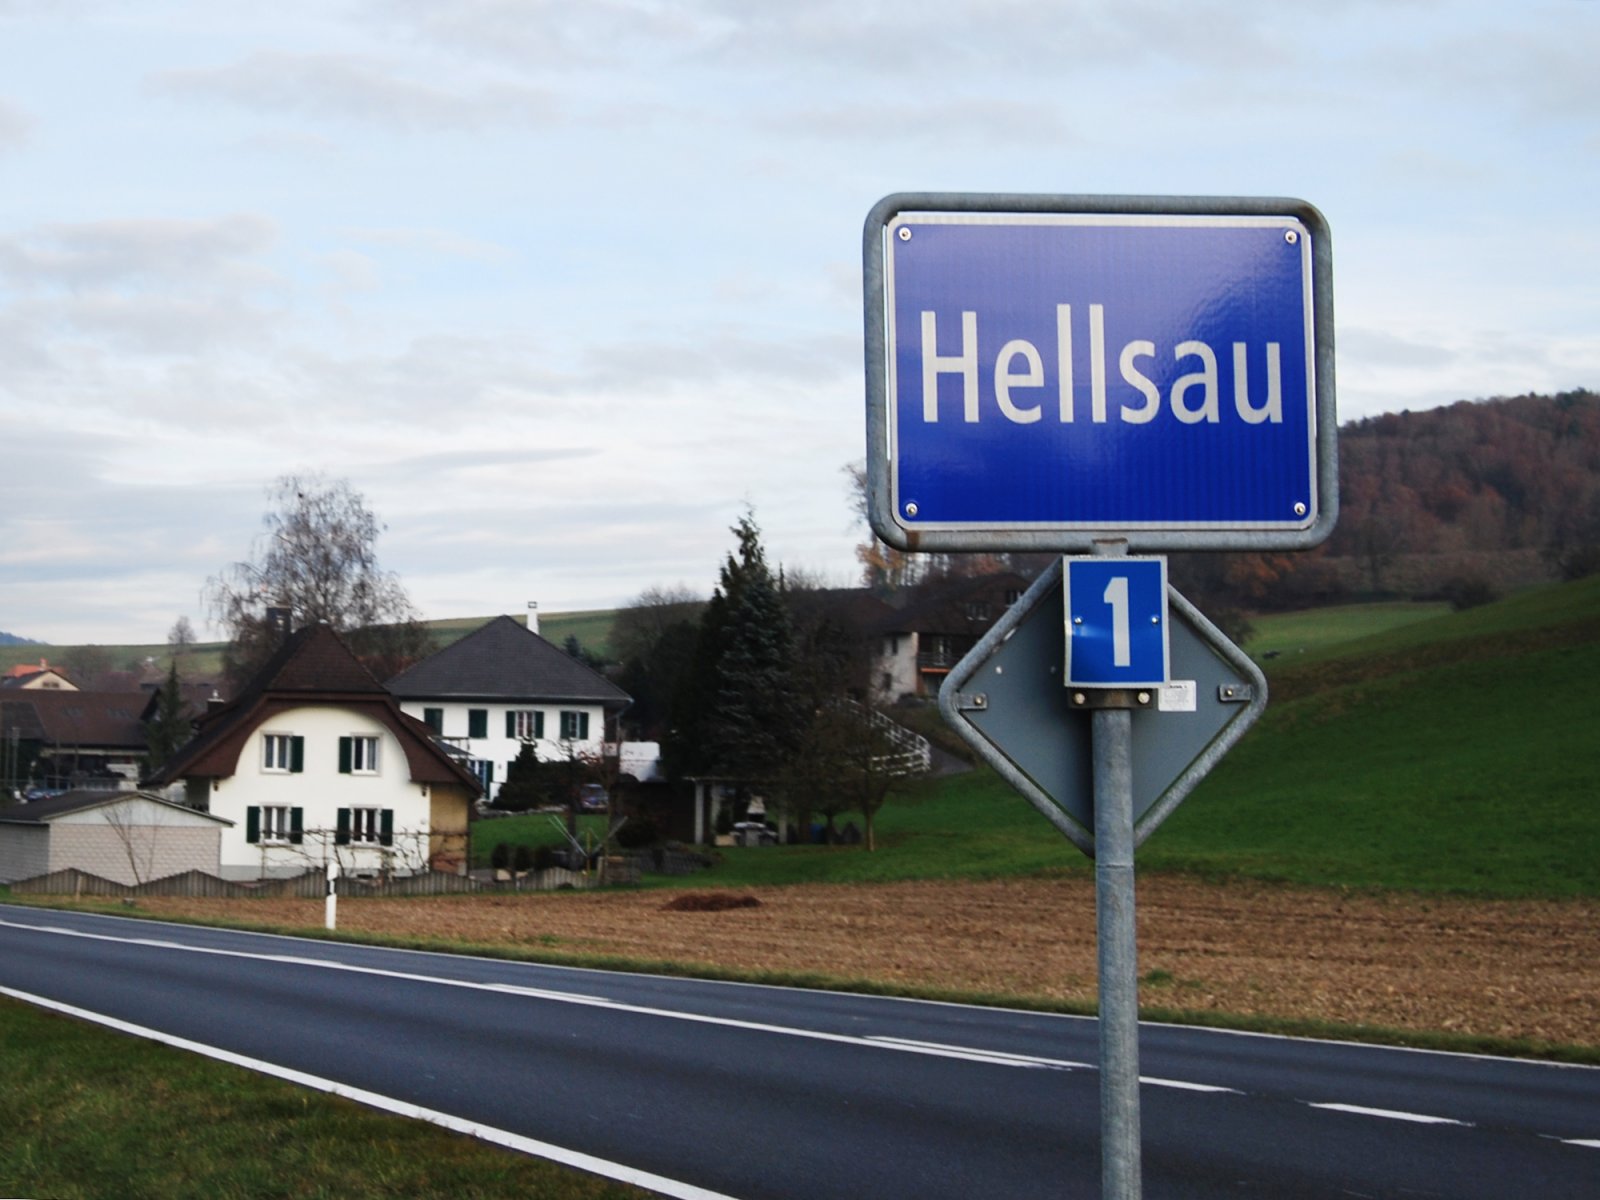 Hellsau Switzerland - Hilarious Swiss Town Names